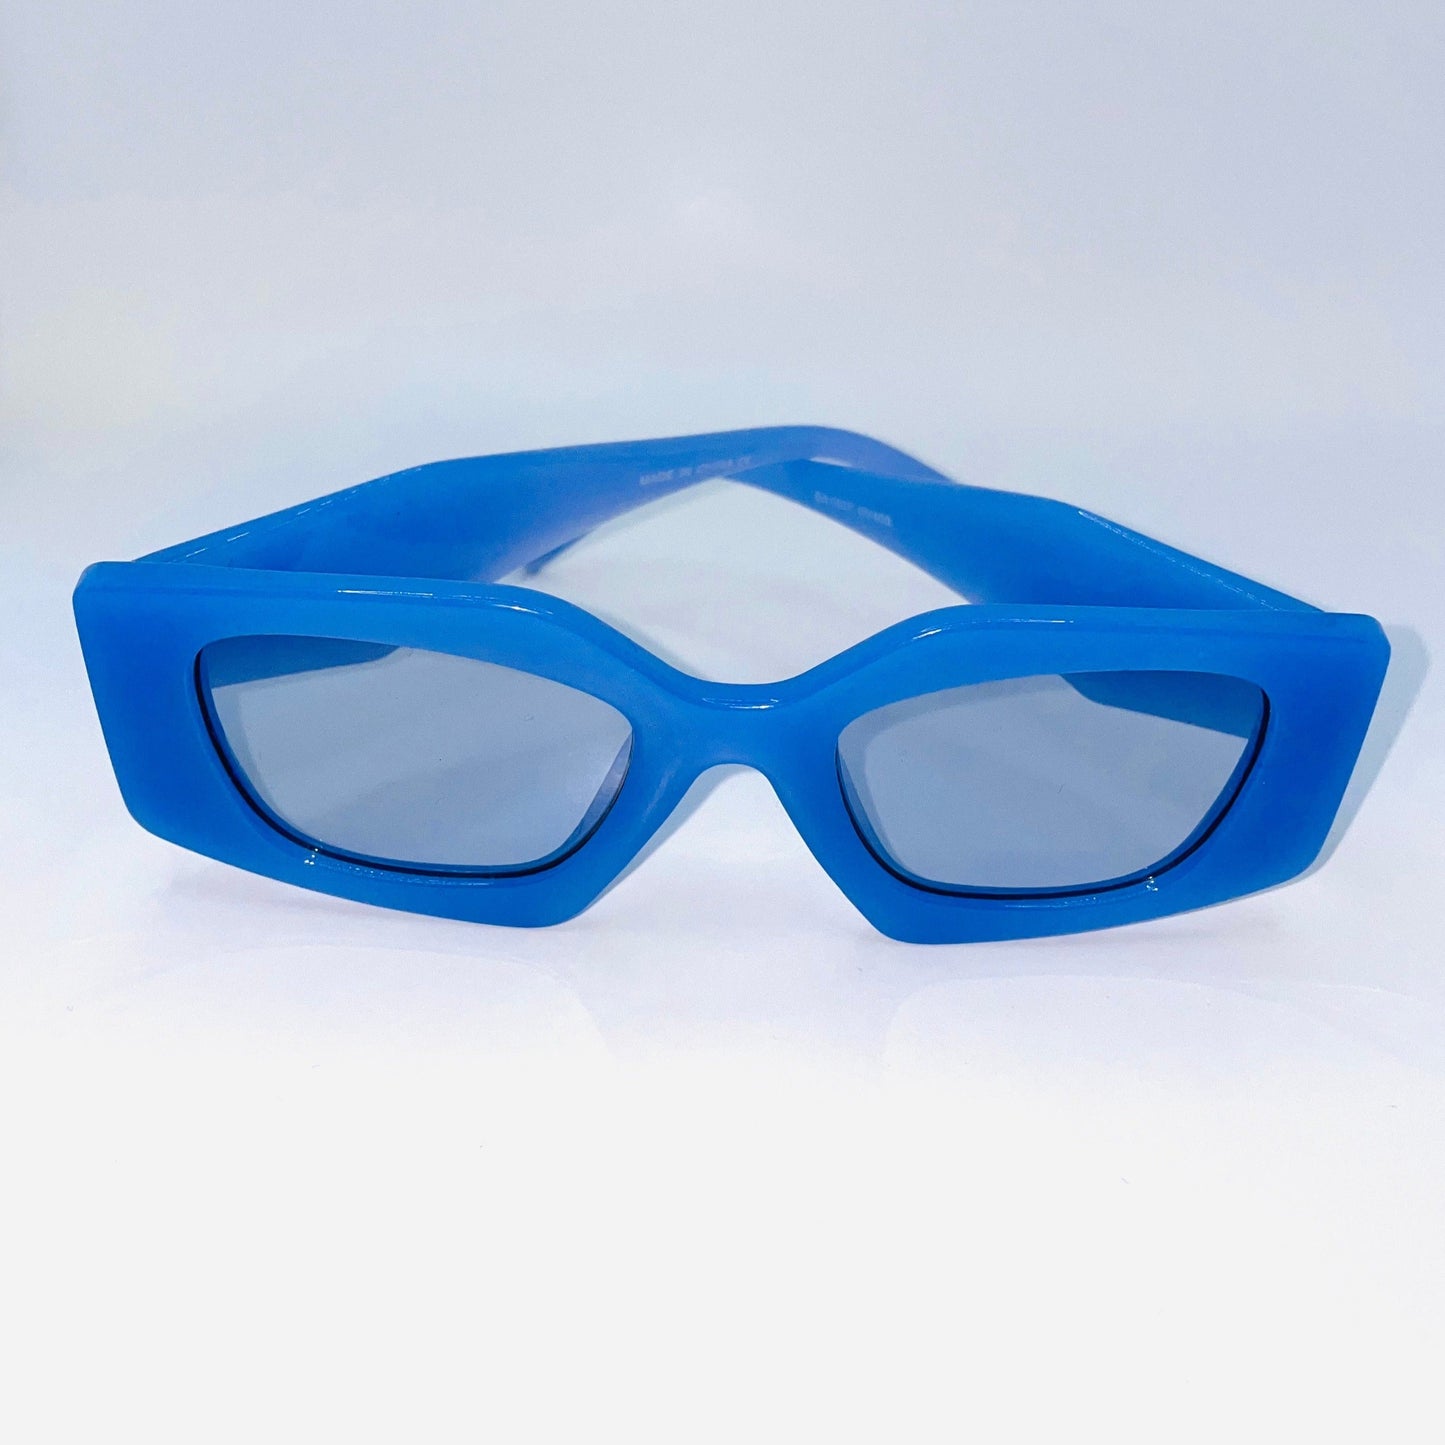 SHUN Glasses (Variety Of Sunglasses)